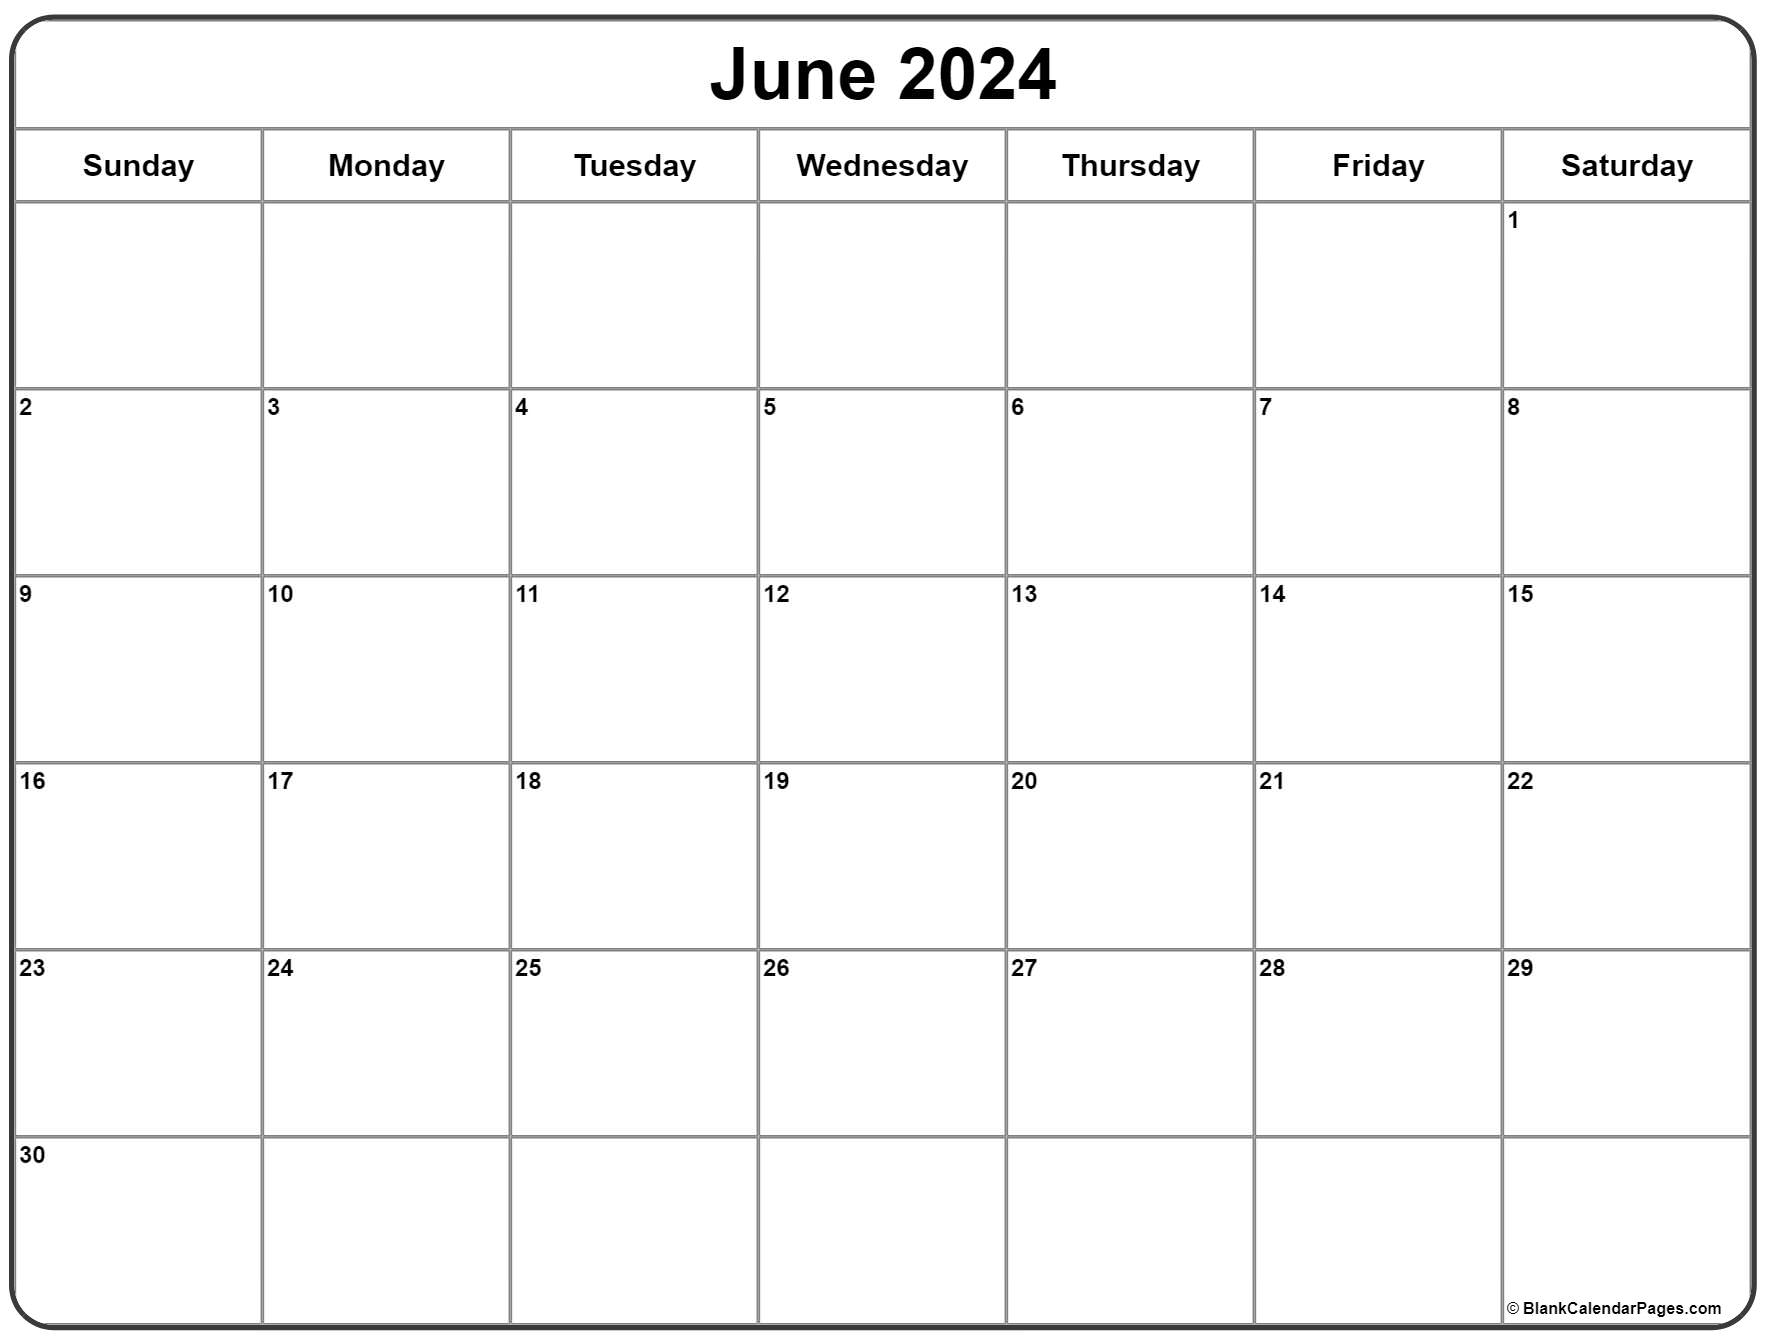 June 2023 calendar free printable calendar